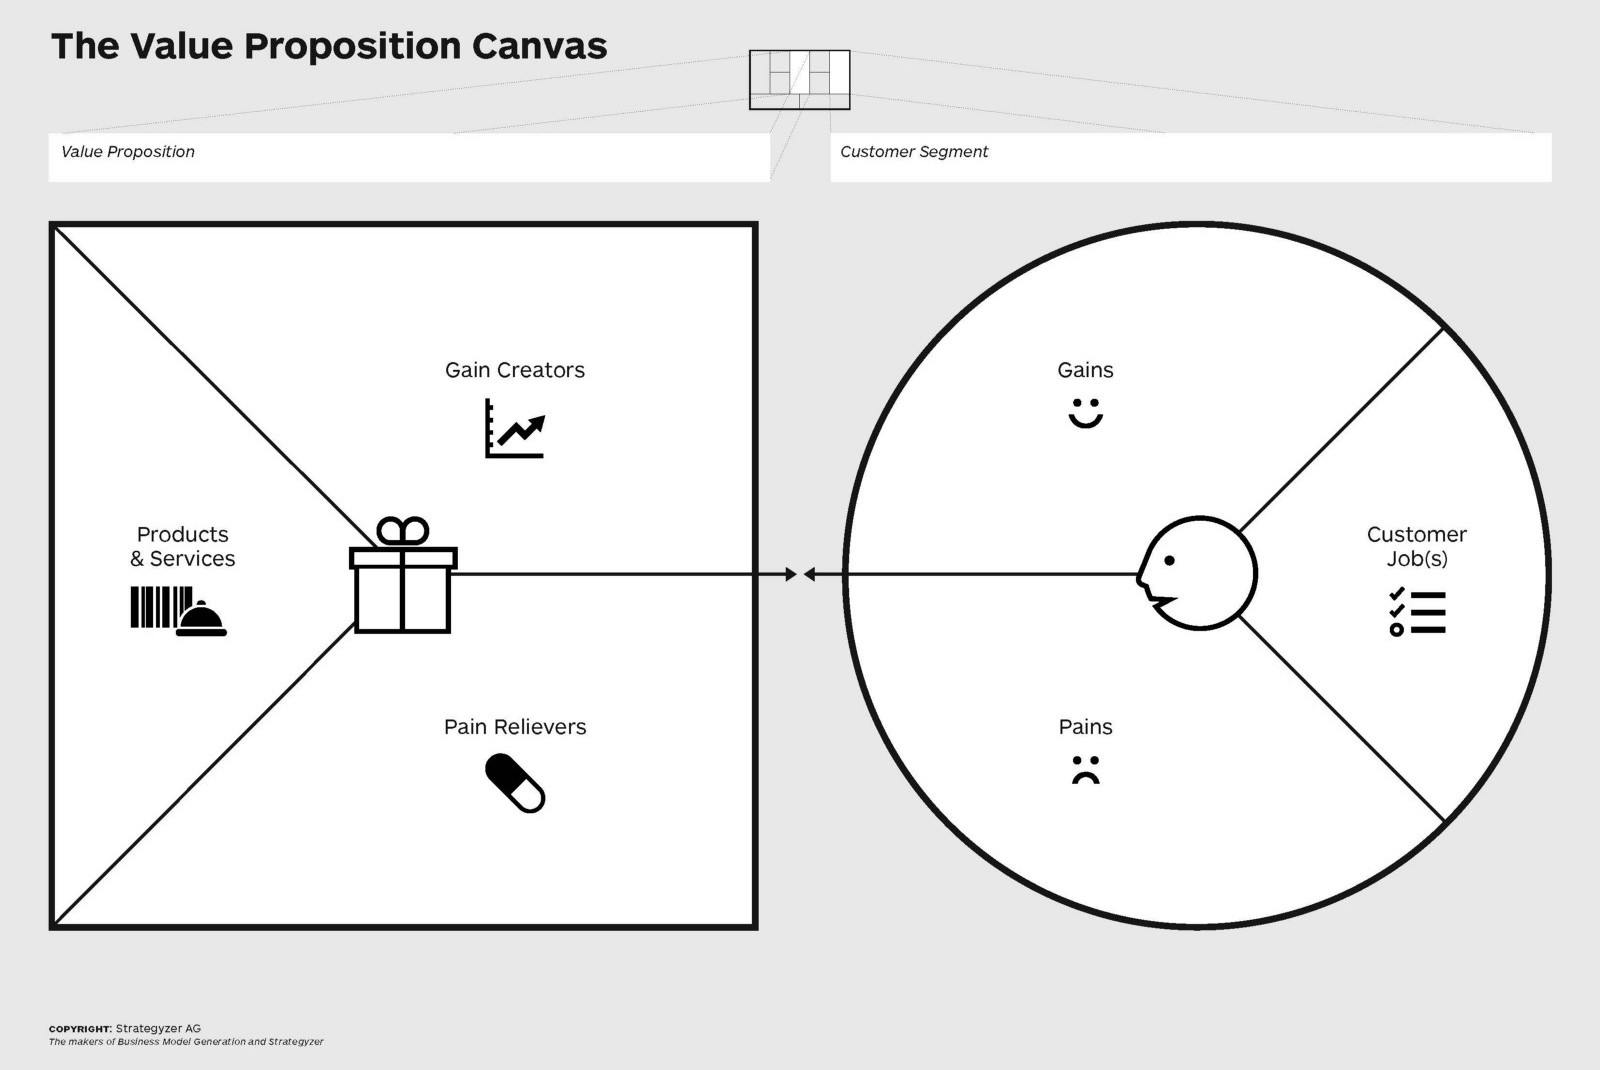 value-proposition-canvas-template-high-resolution-strategyzer.jpeg